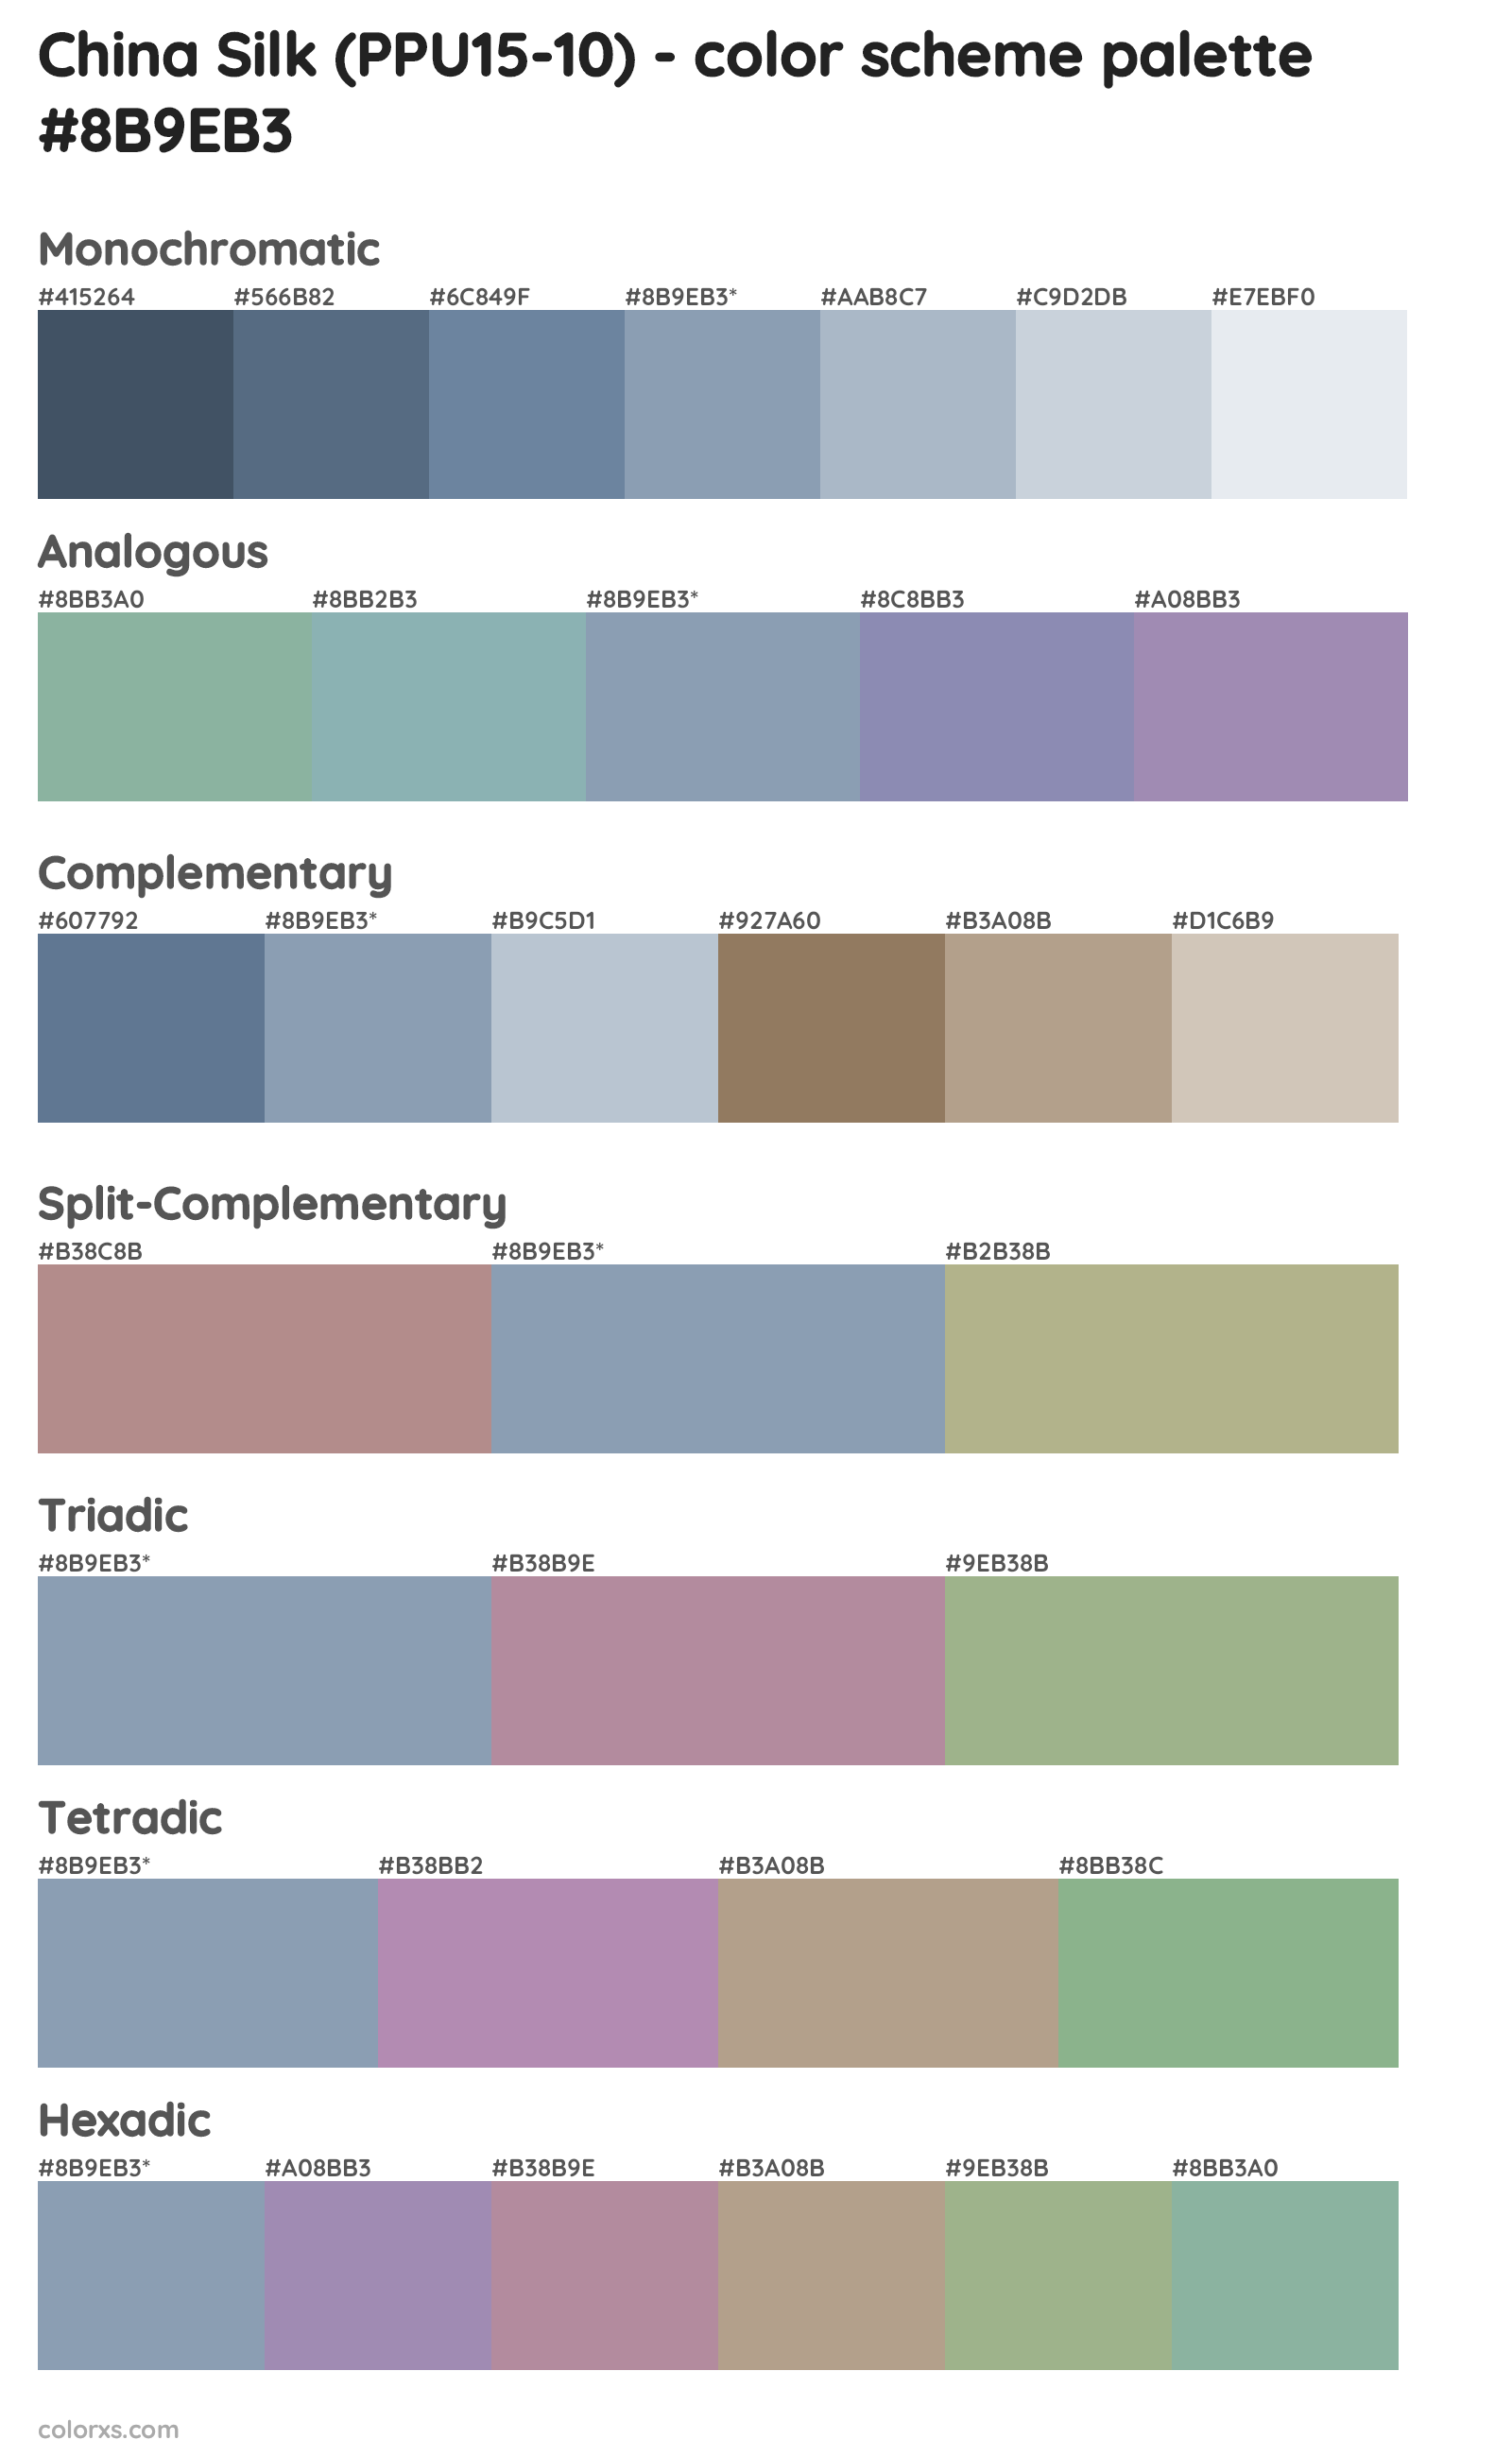 China Silk (PPU15-10) Color Scheme Palettes